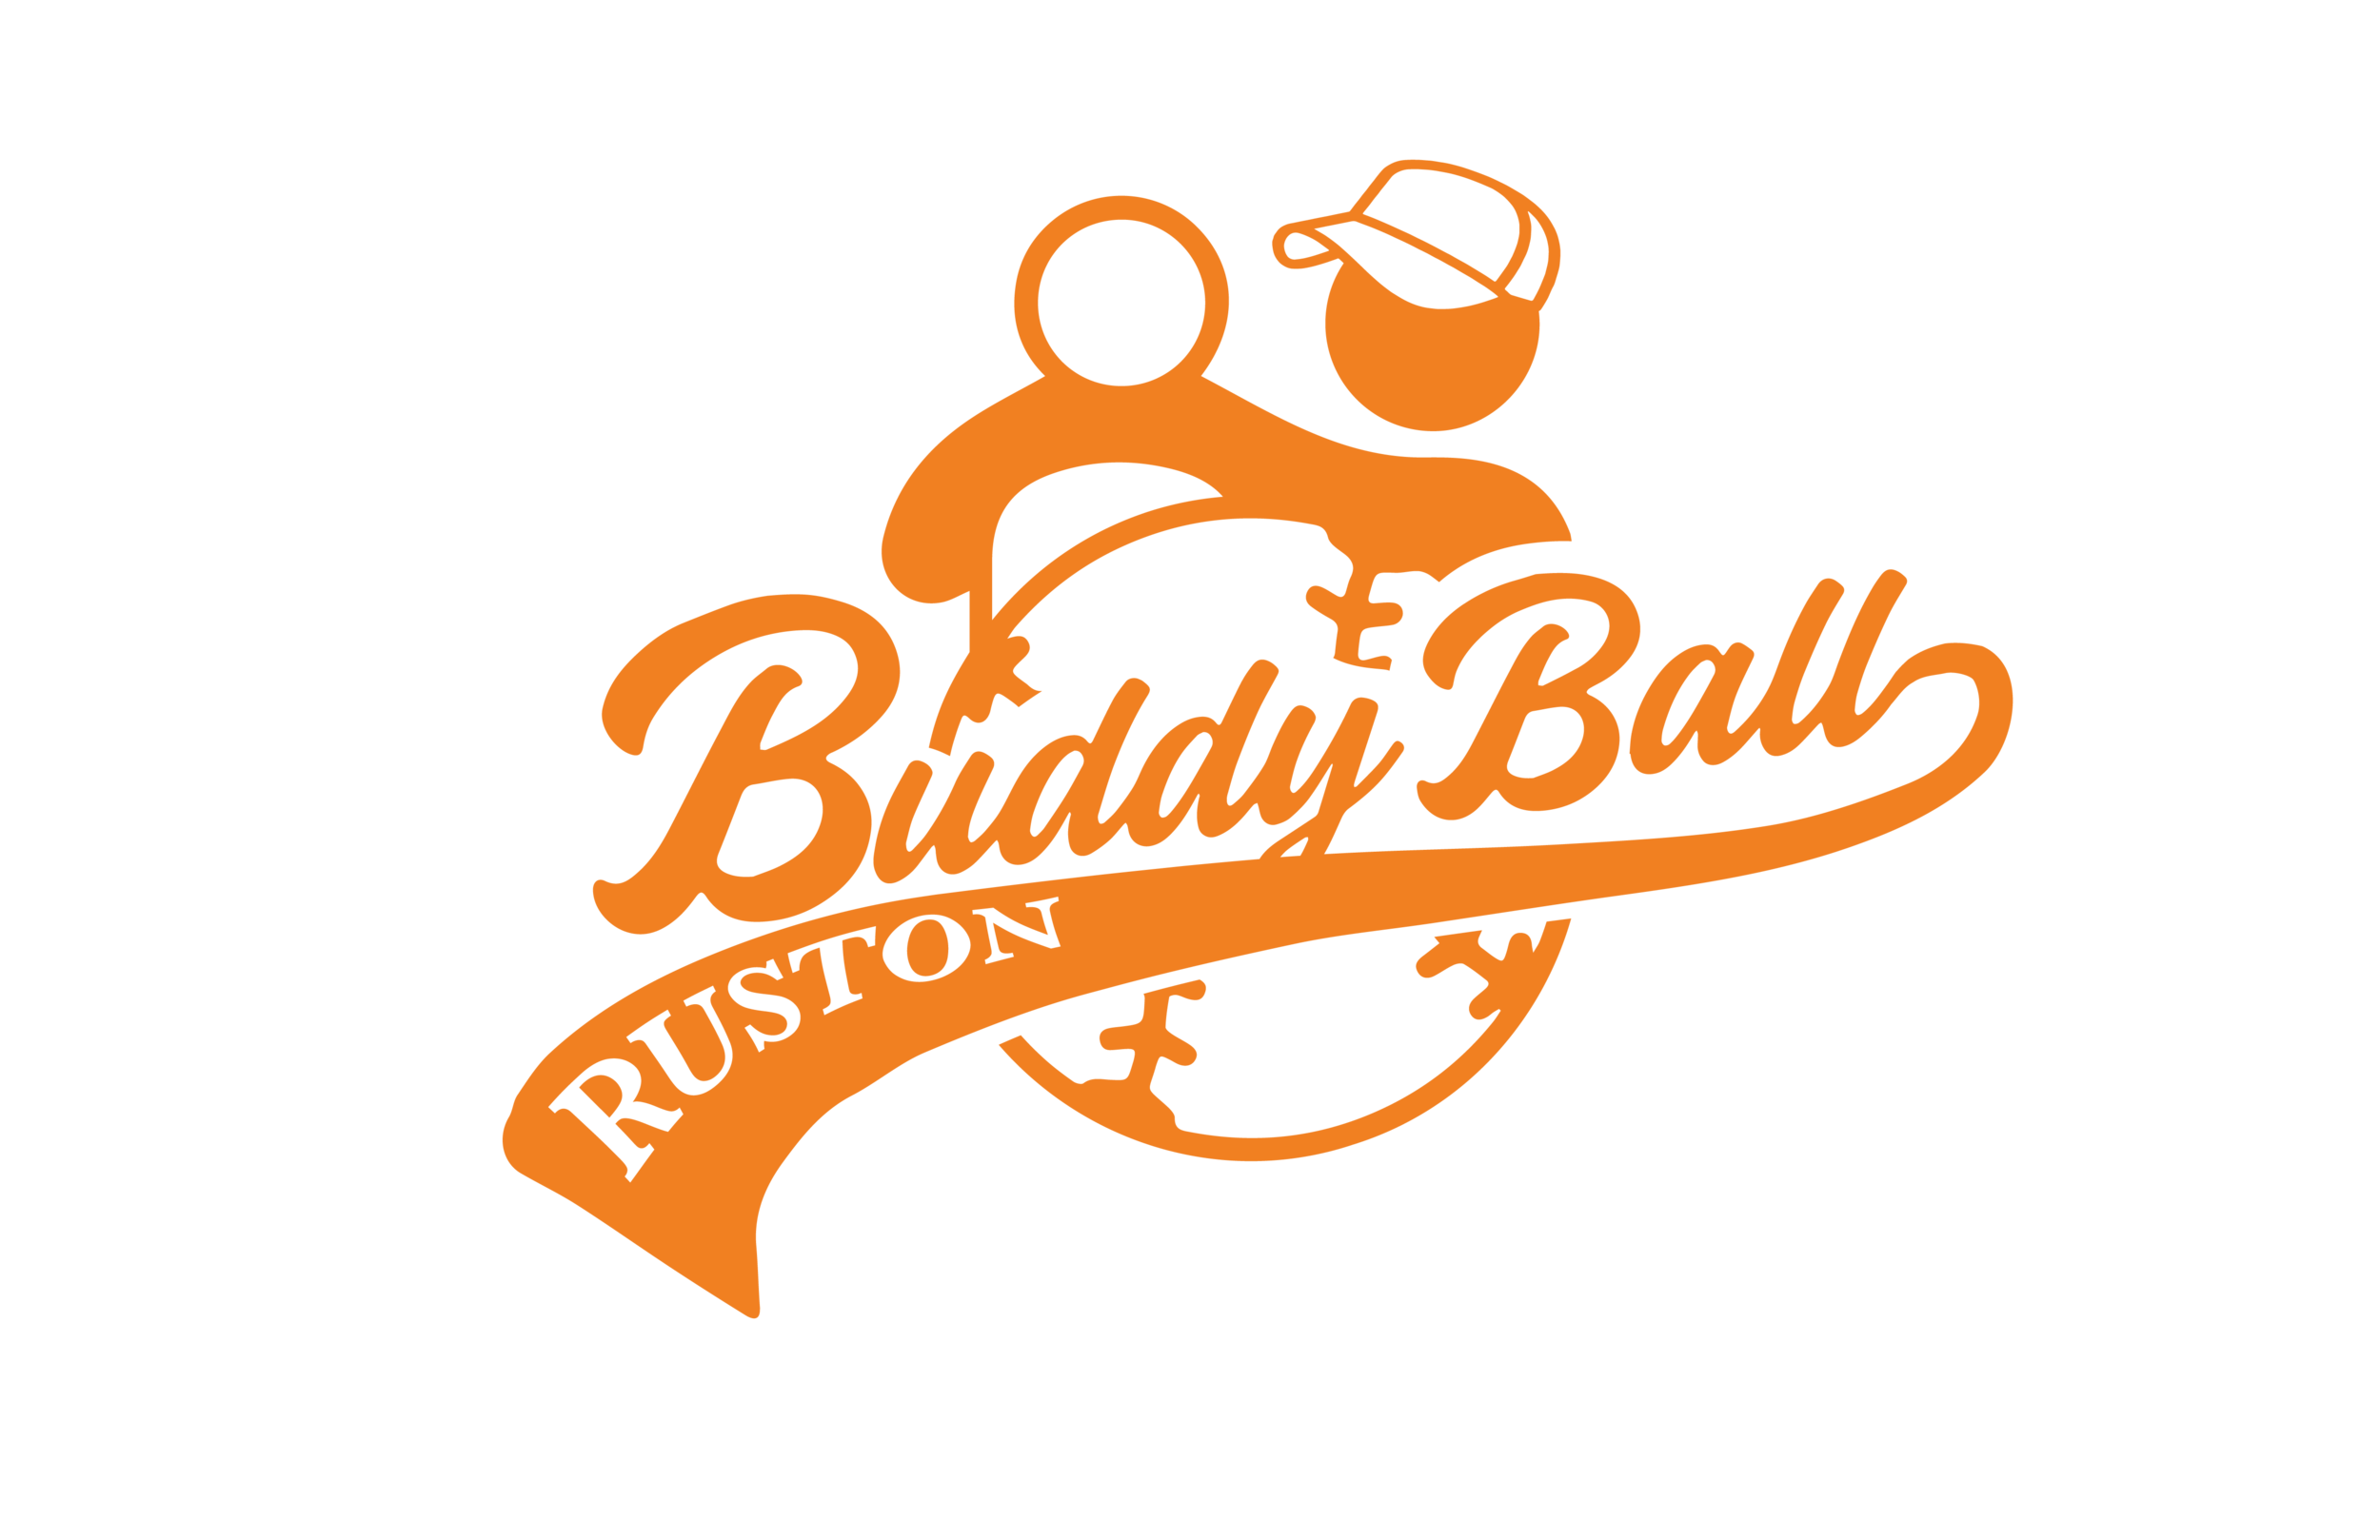 Buddy Ball of Ruston